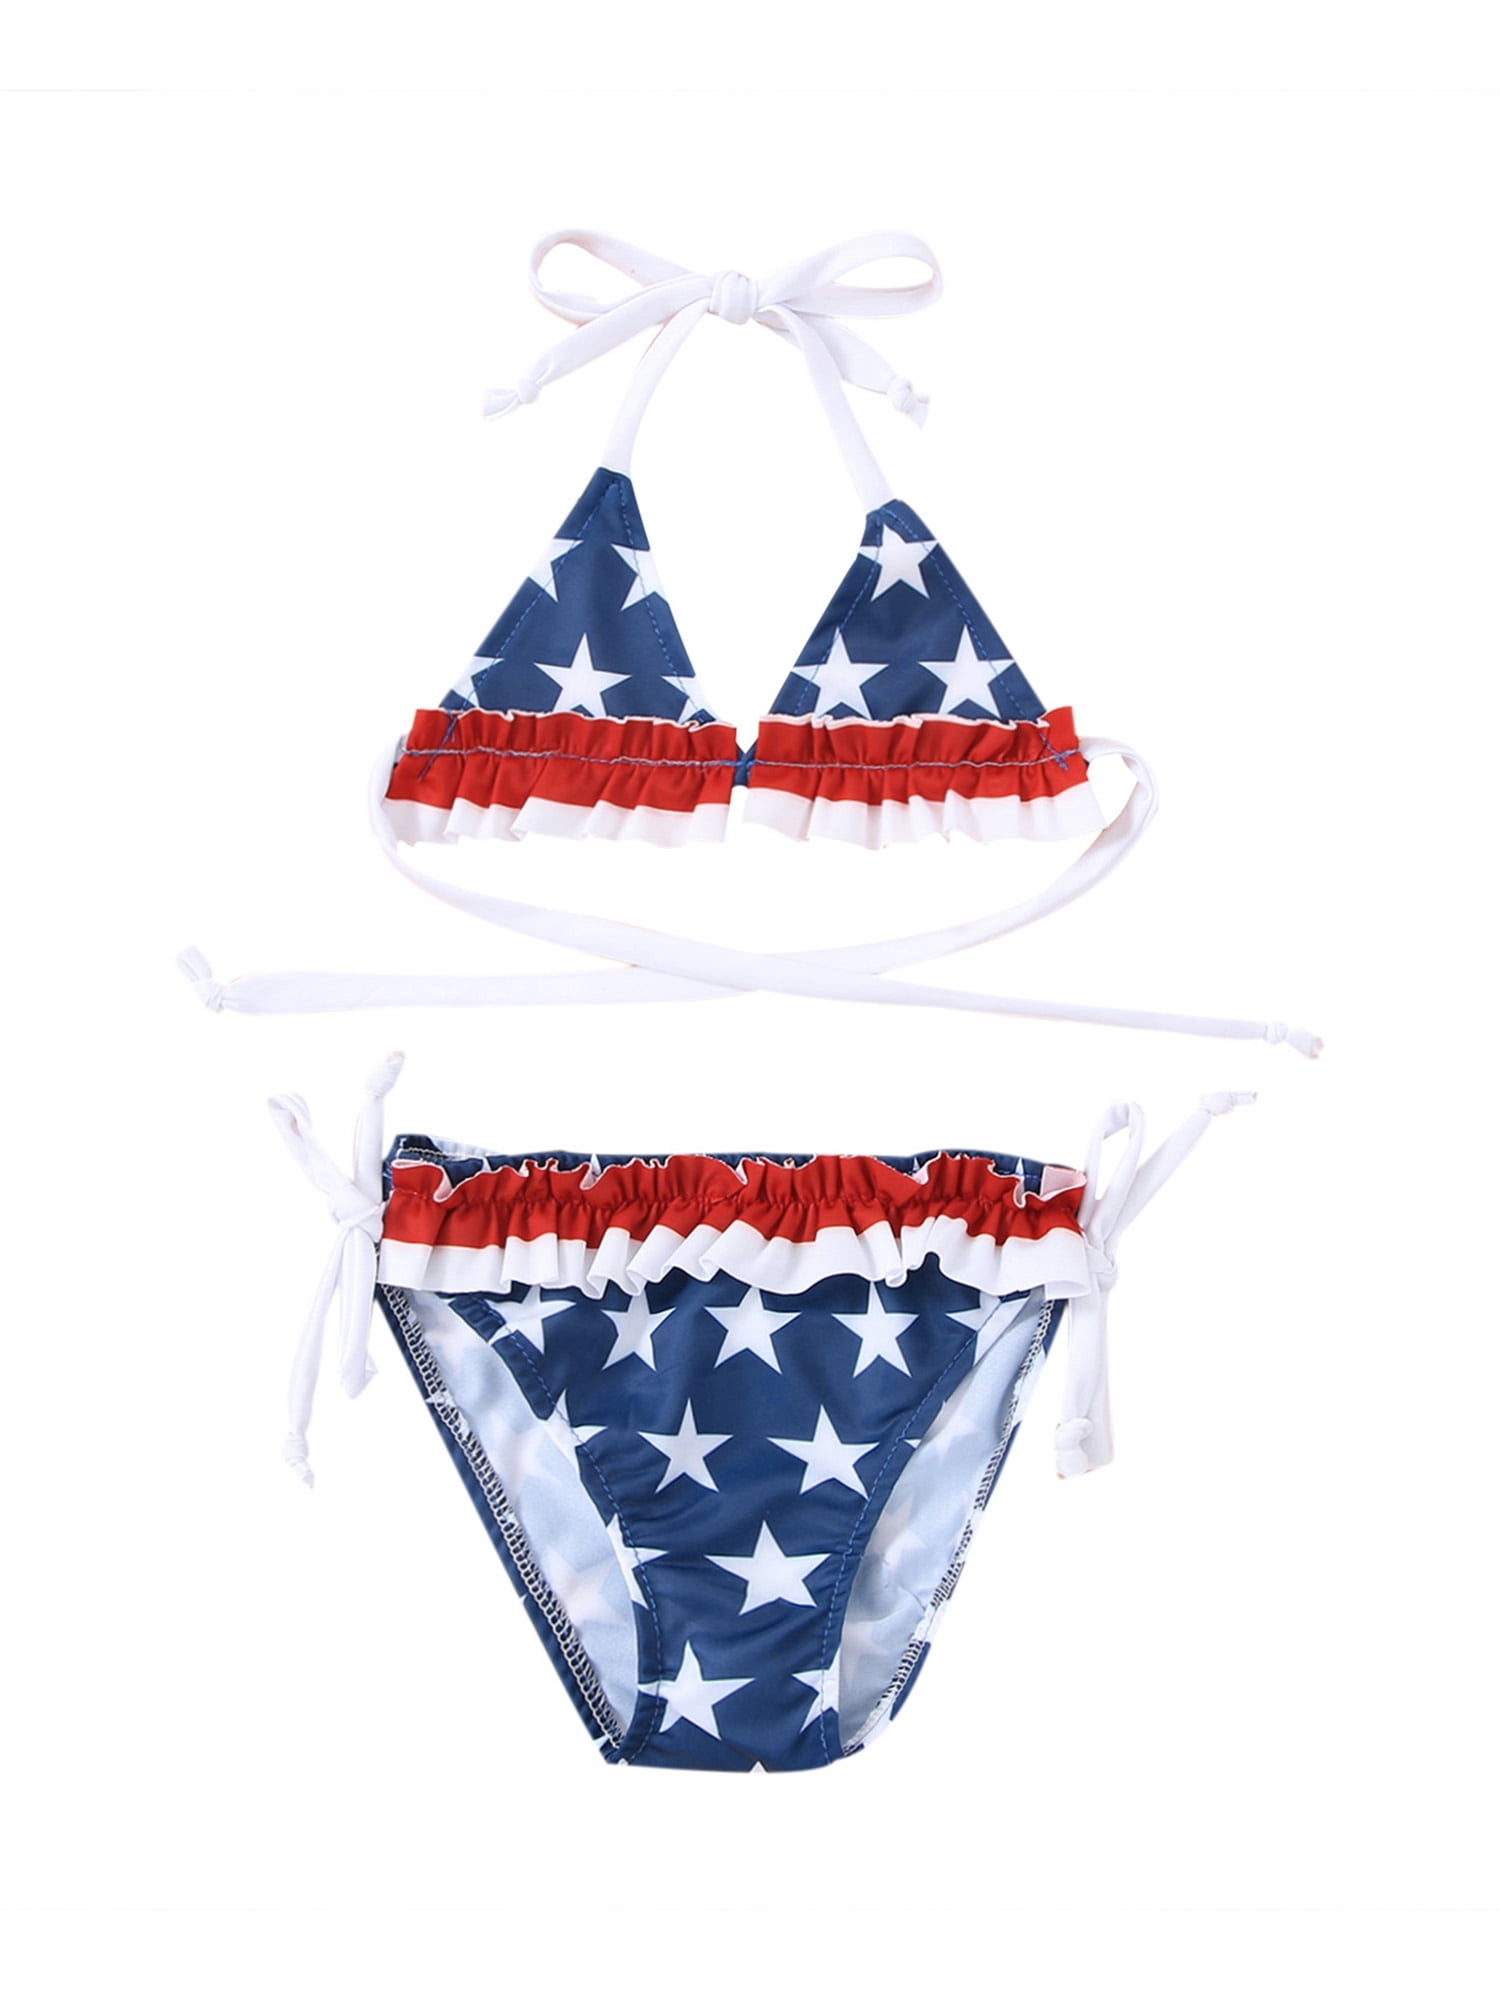 Cute Girls Toddlers Moana Swimsuit Swimwear 2pcs Set Bathing suit Bikini Cosplay 